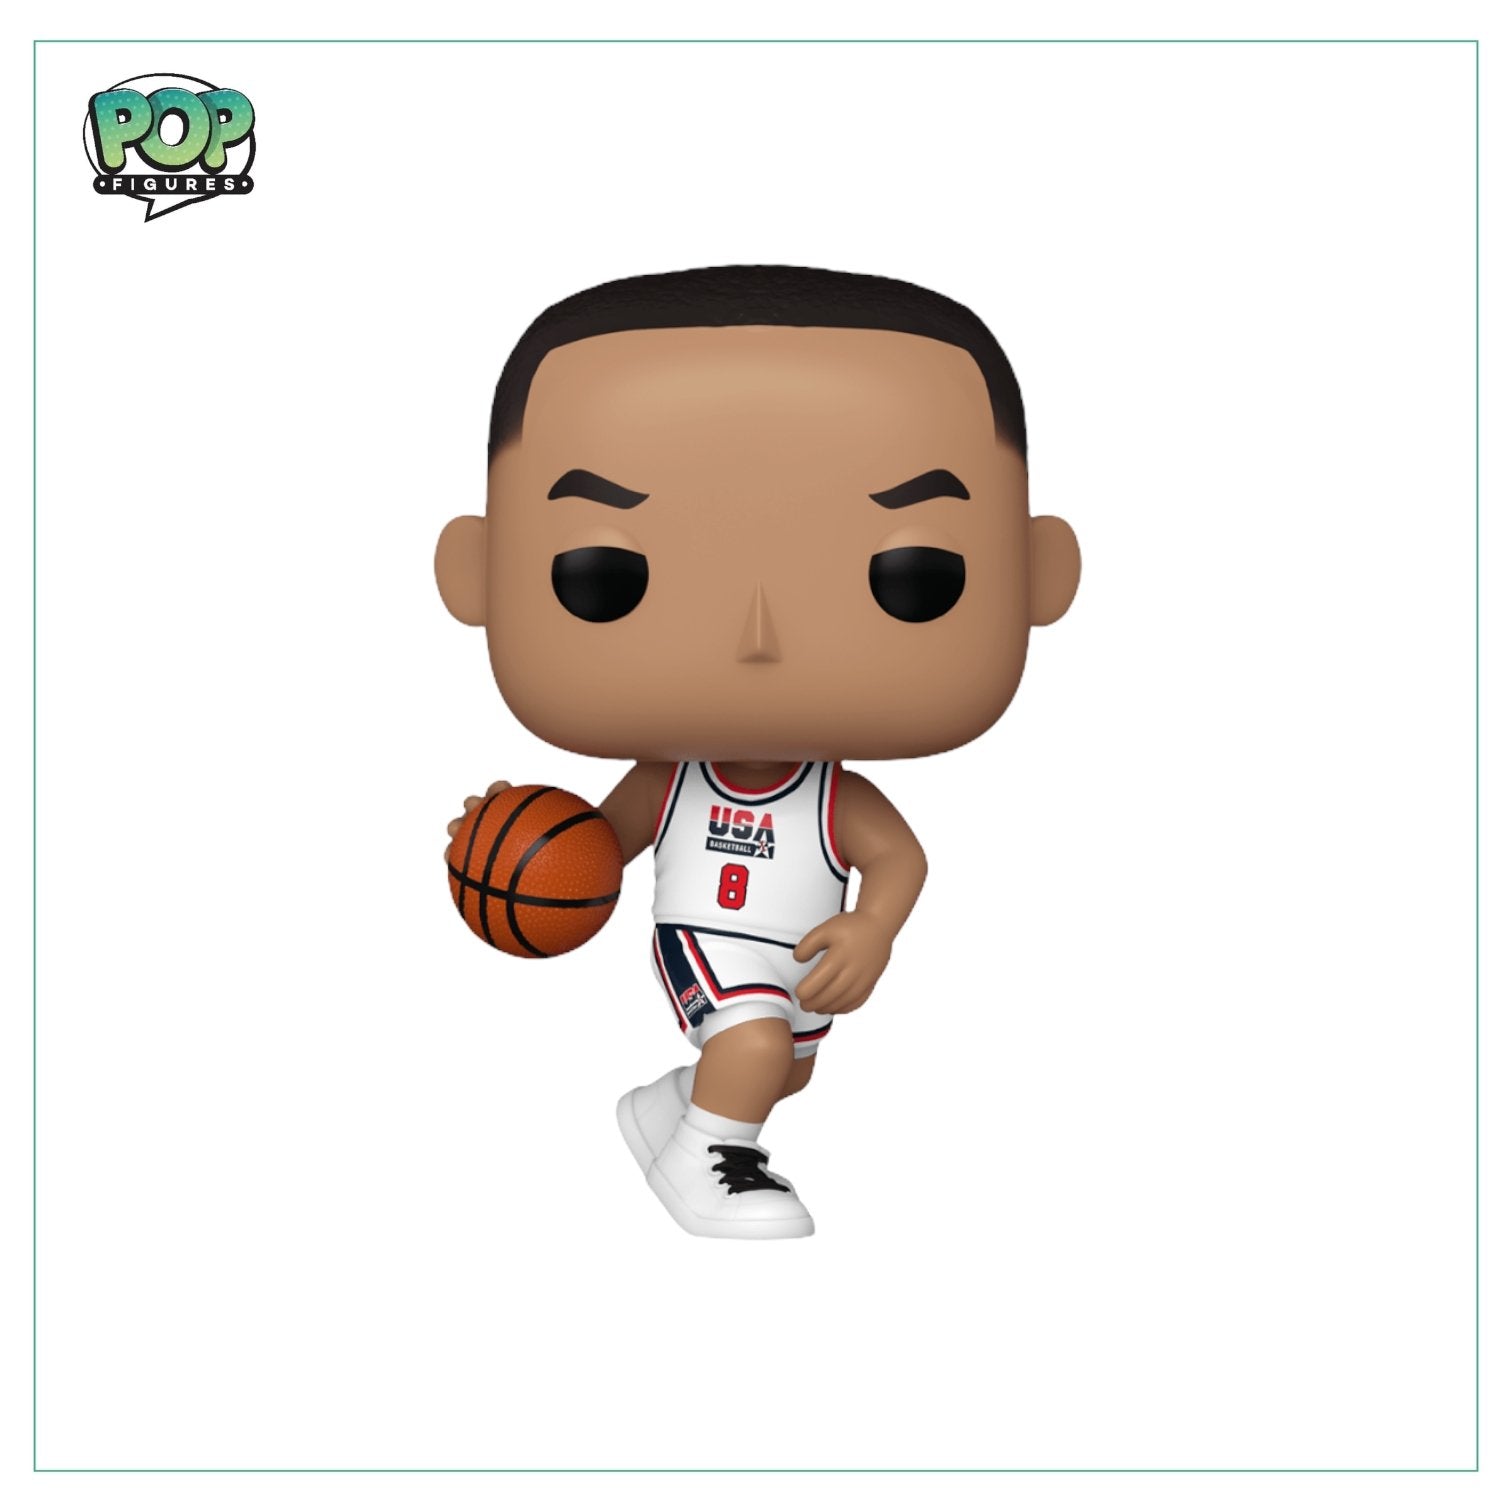 USA Basketball - Scottie Pippen - Target Exclusive - PREORDER - Pop Figures | Funko | Pop Funko | Funko Pop